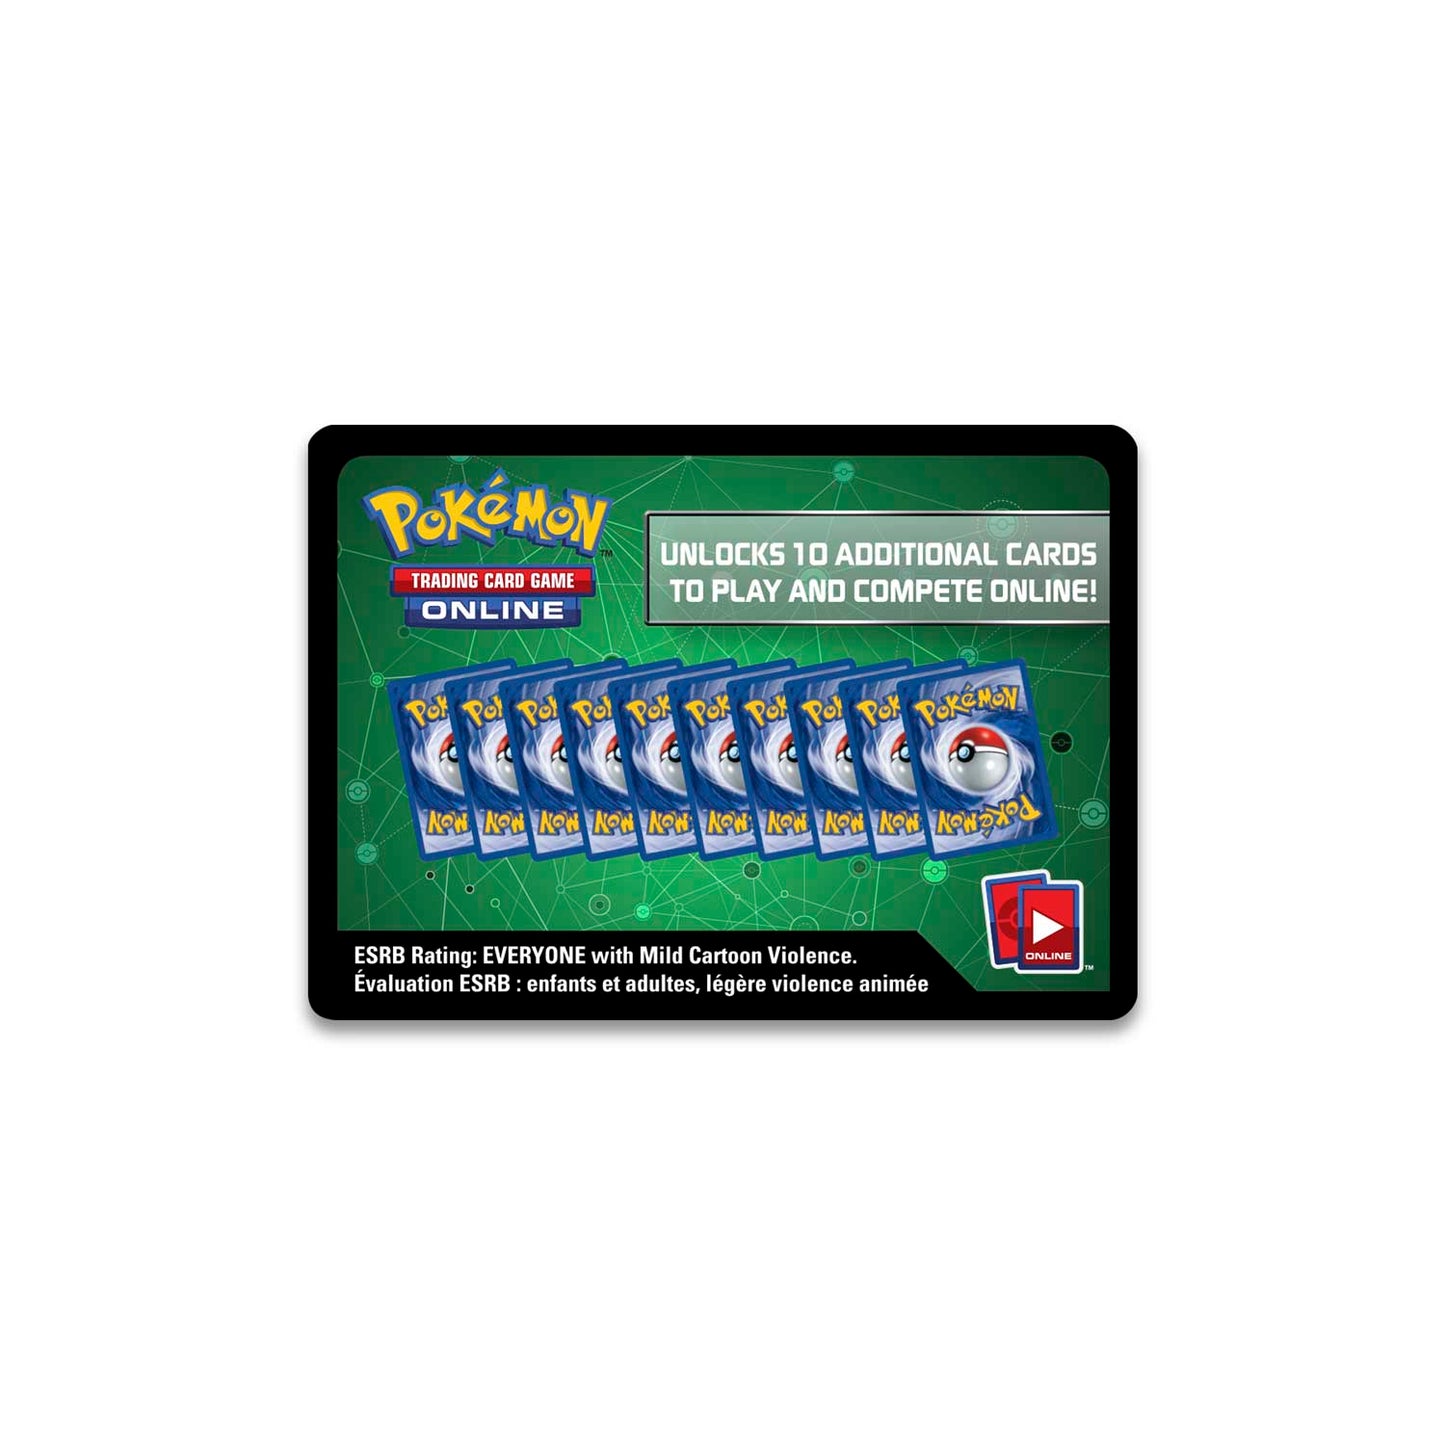 Pokémon TCG: Vivid Voltage Sleeved Booster Pack